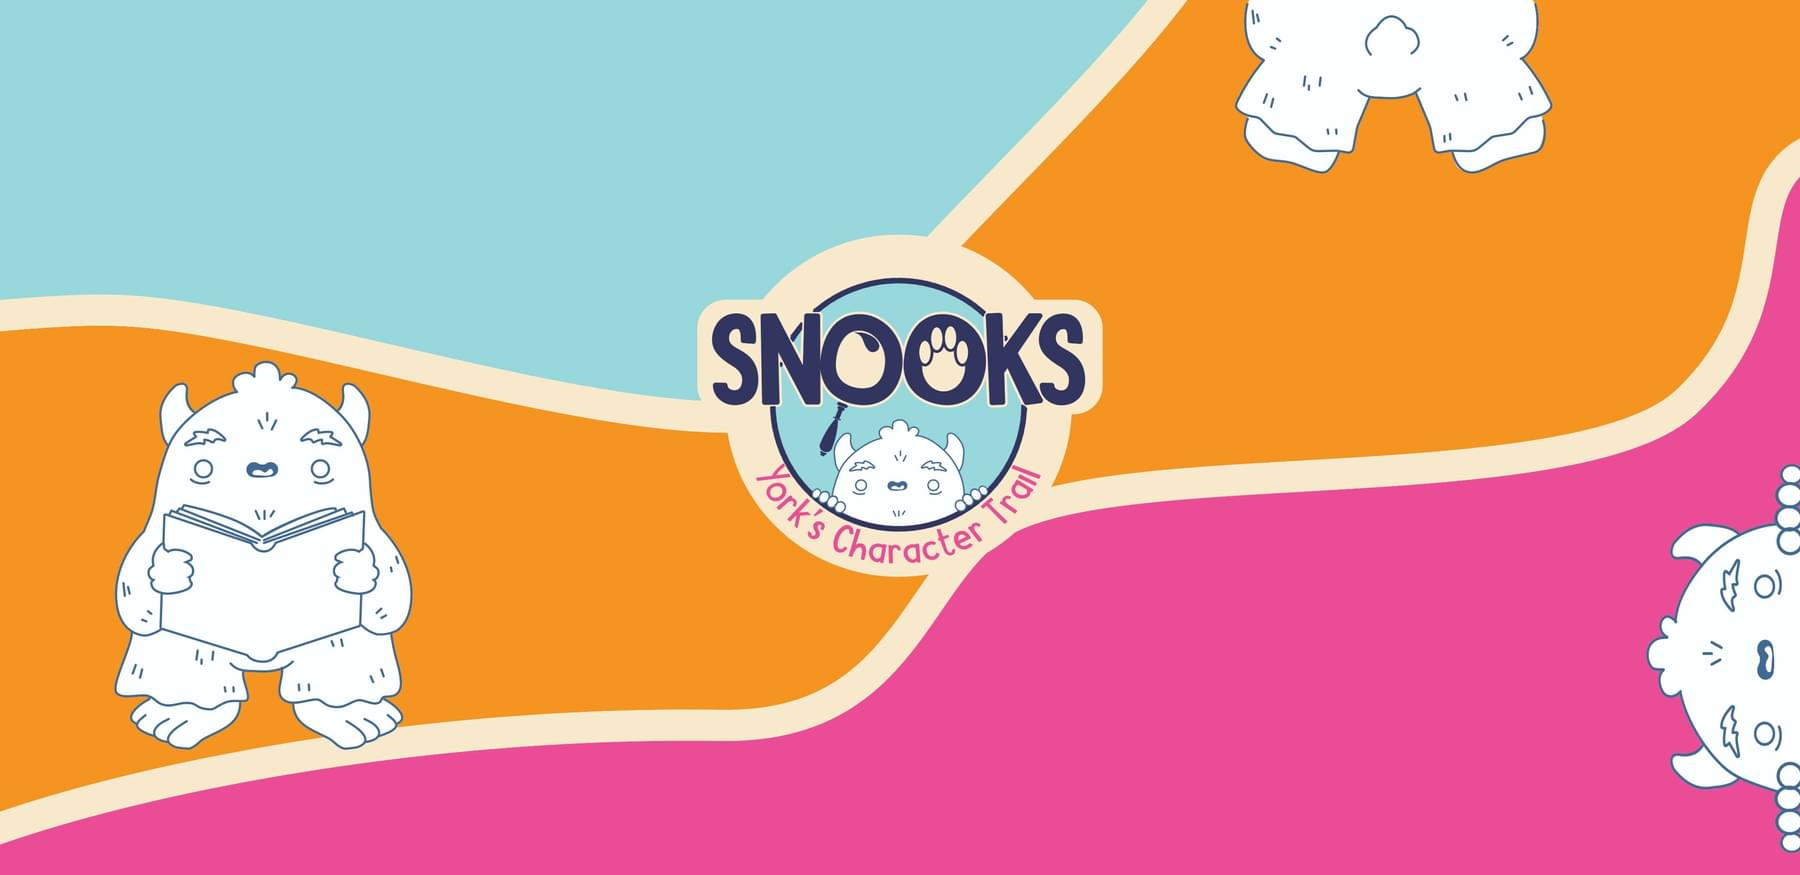 Snooks web header 1